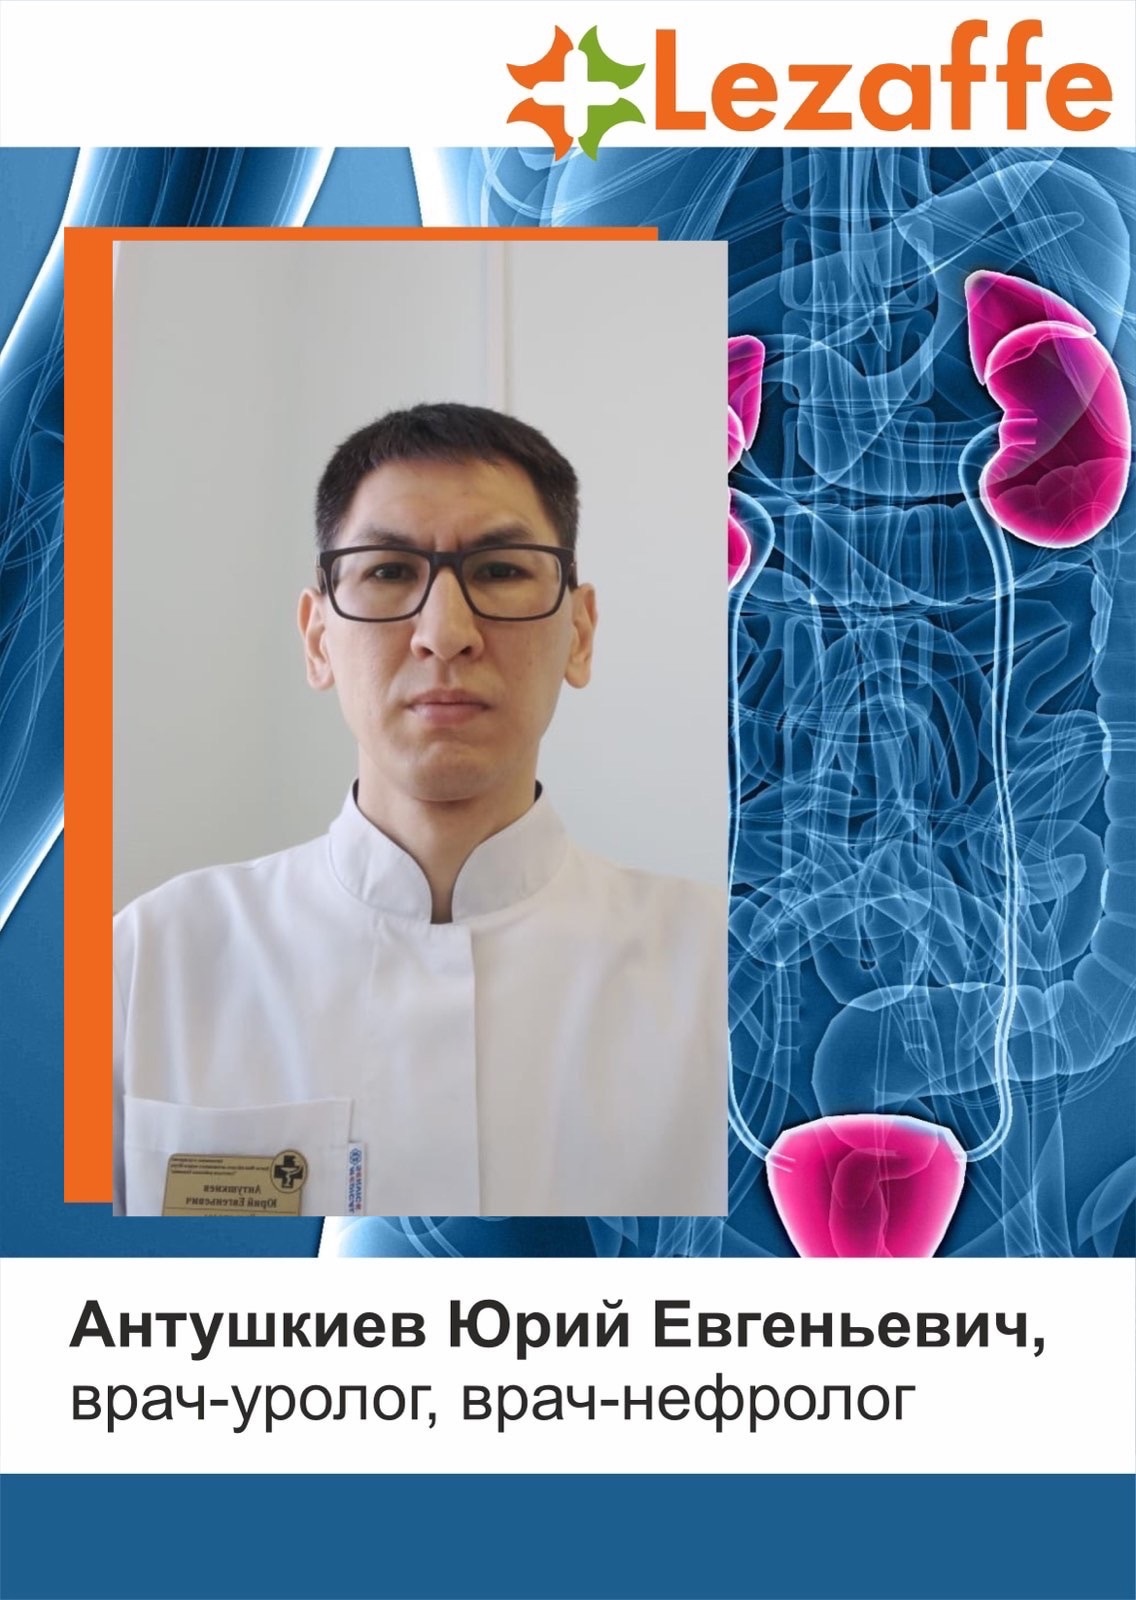 Антушкиев Юрий Евгеньевич - врач-уролог, врач-нефролог г. Нягань